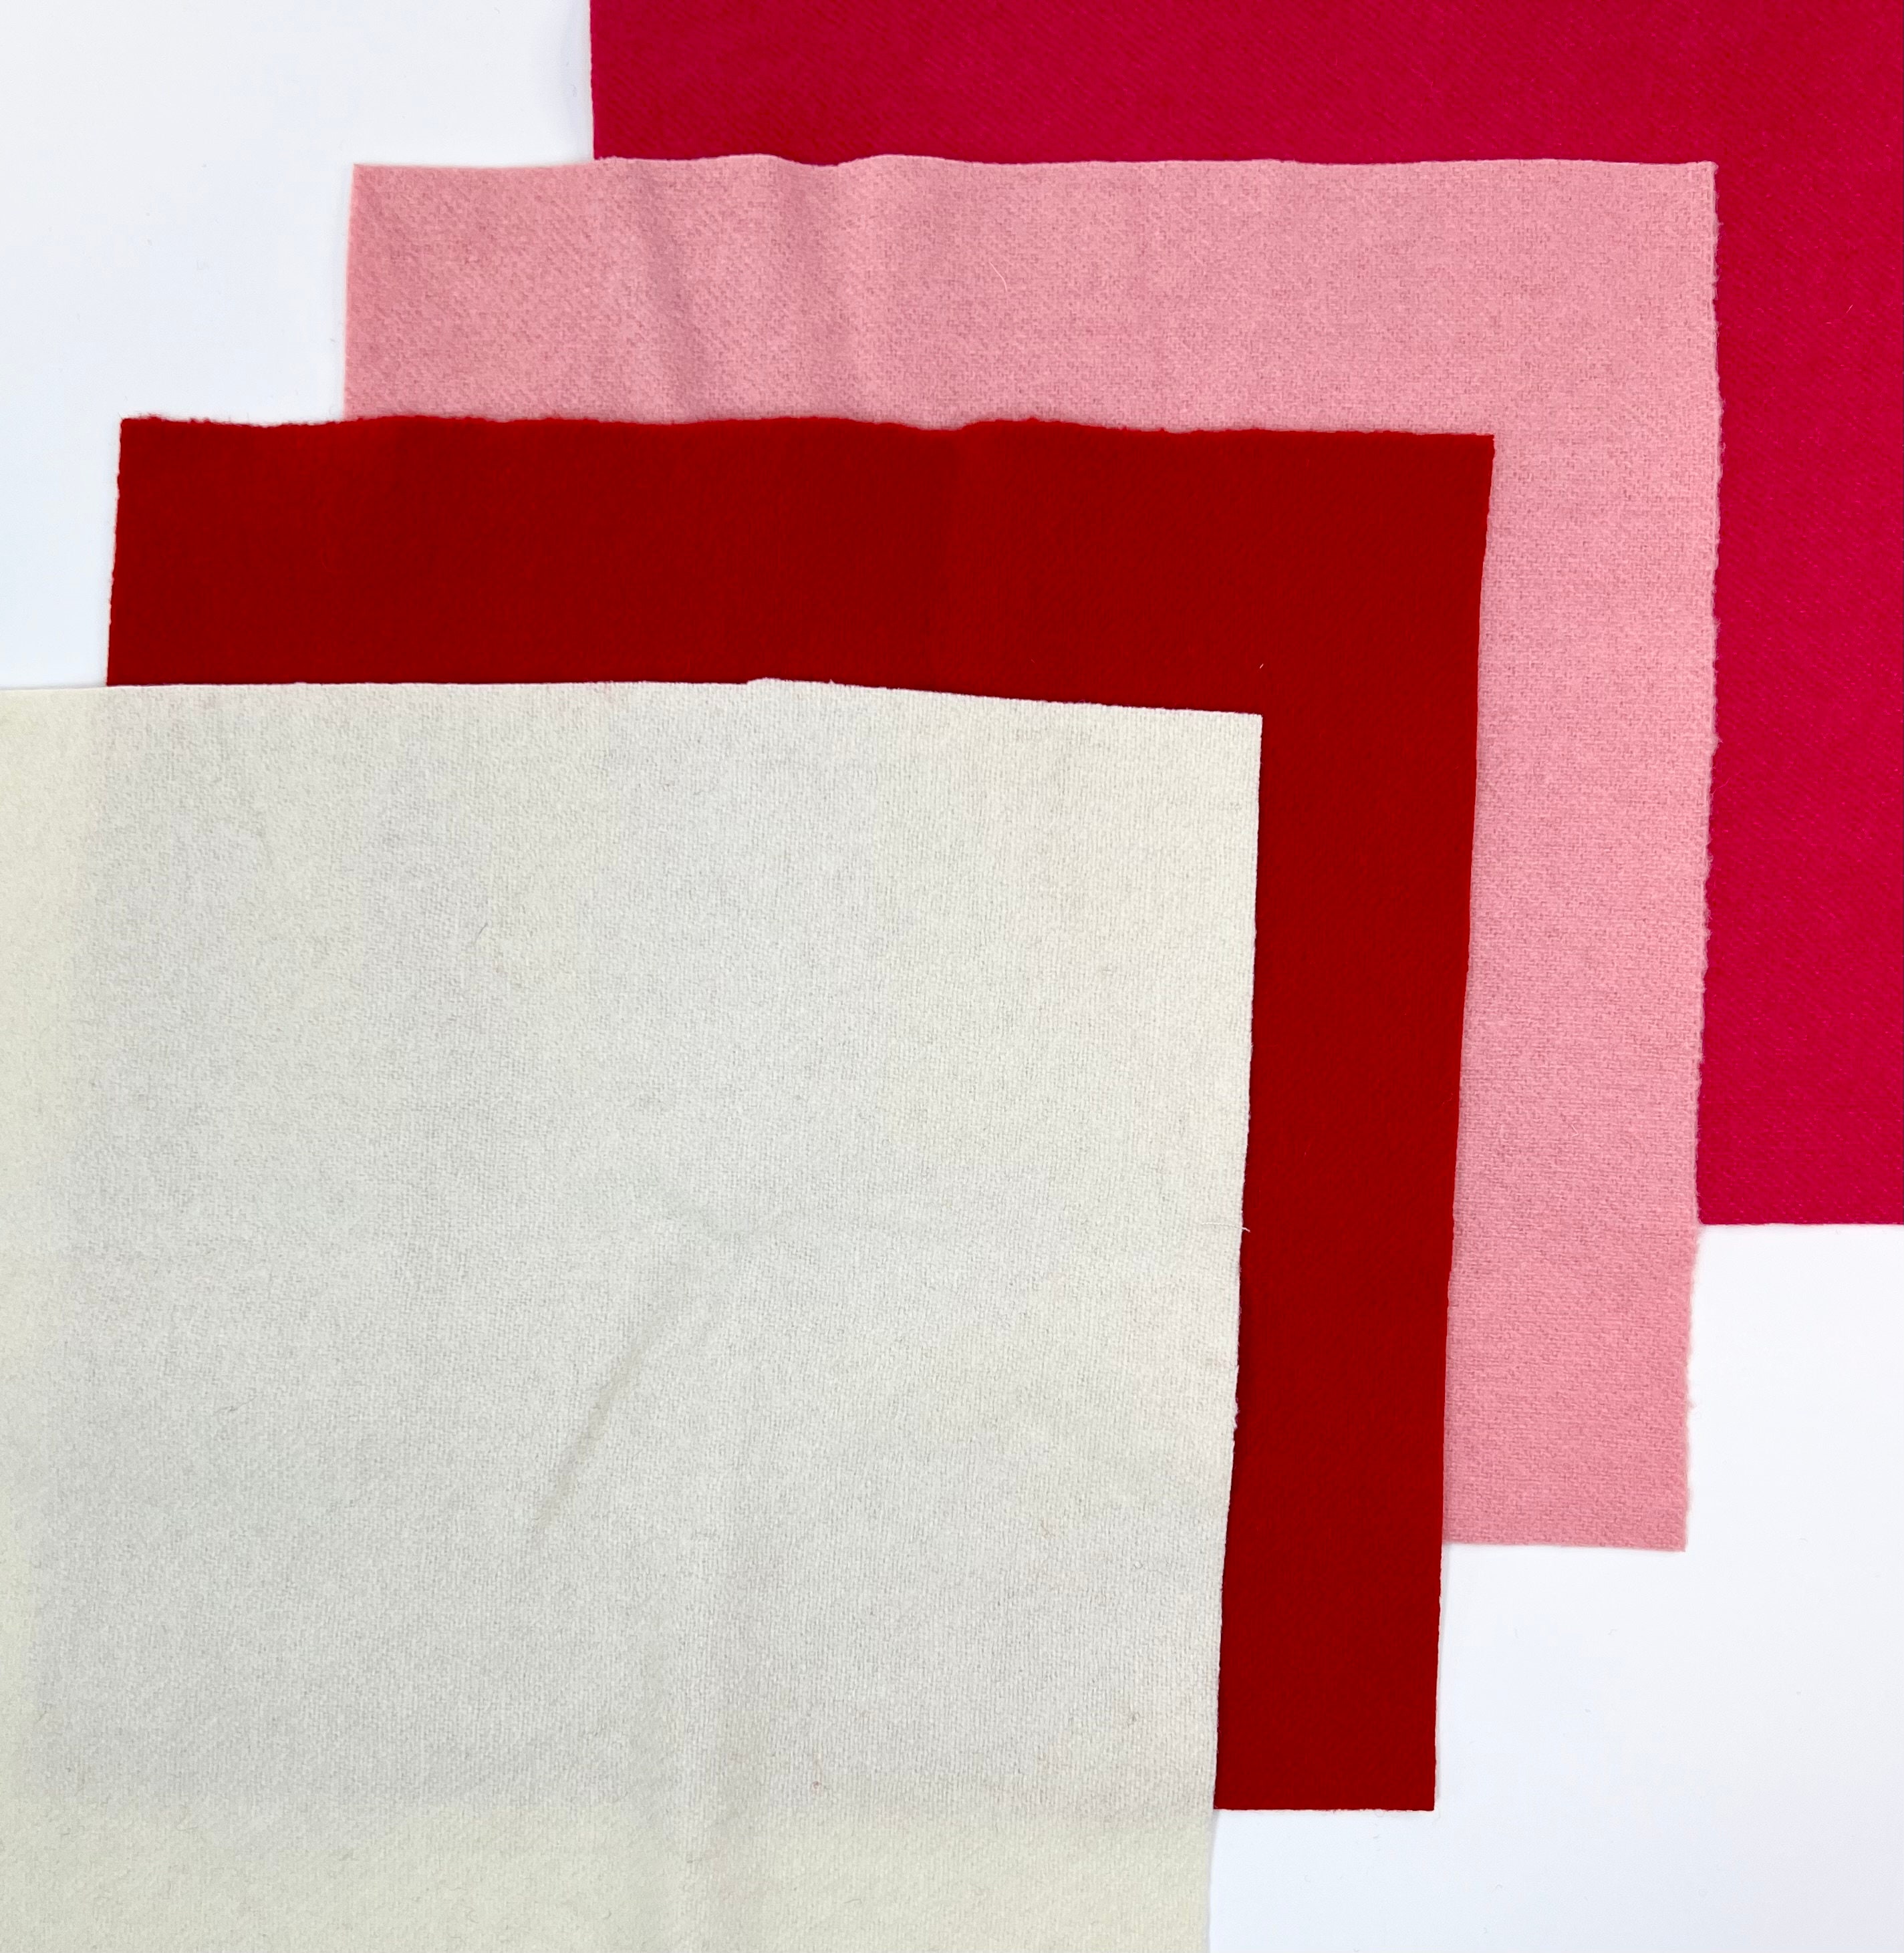 Gift Card Holder Wool Felt Appliqué Kit - Stitched Modern